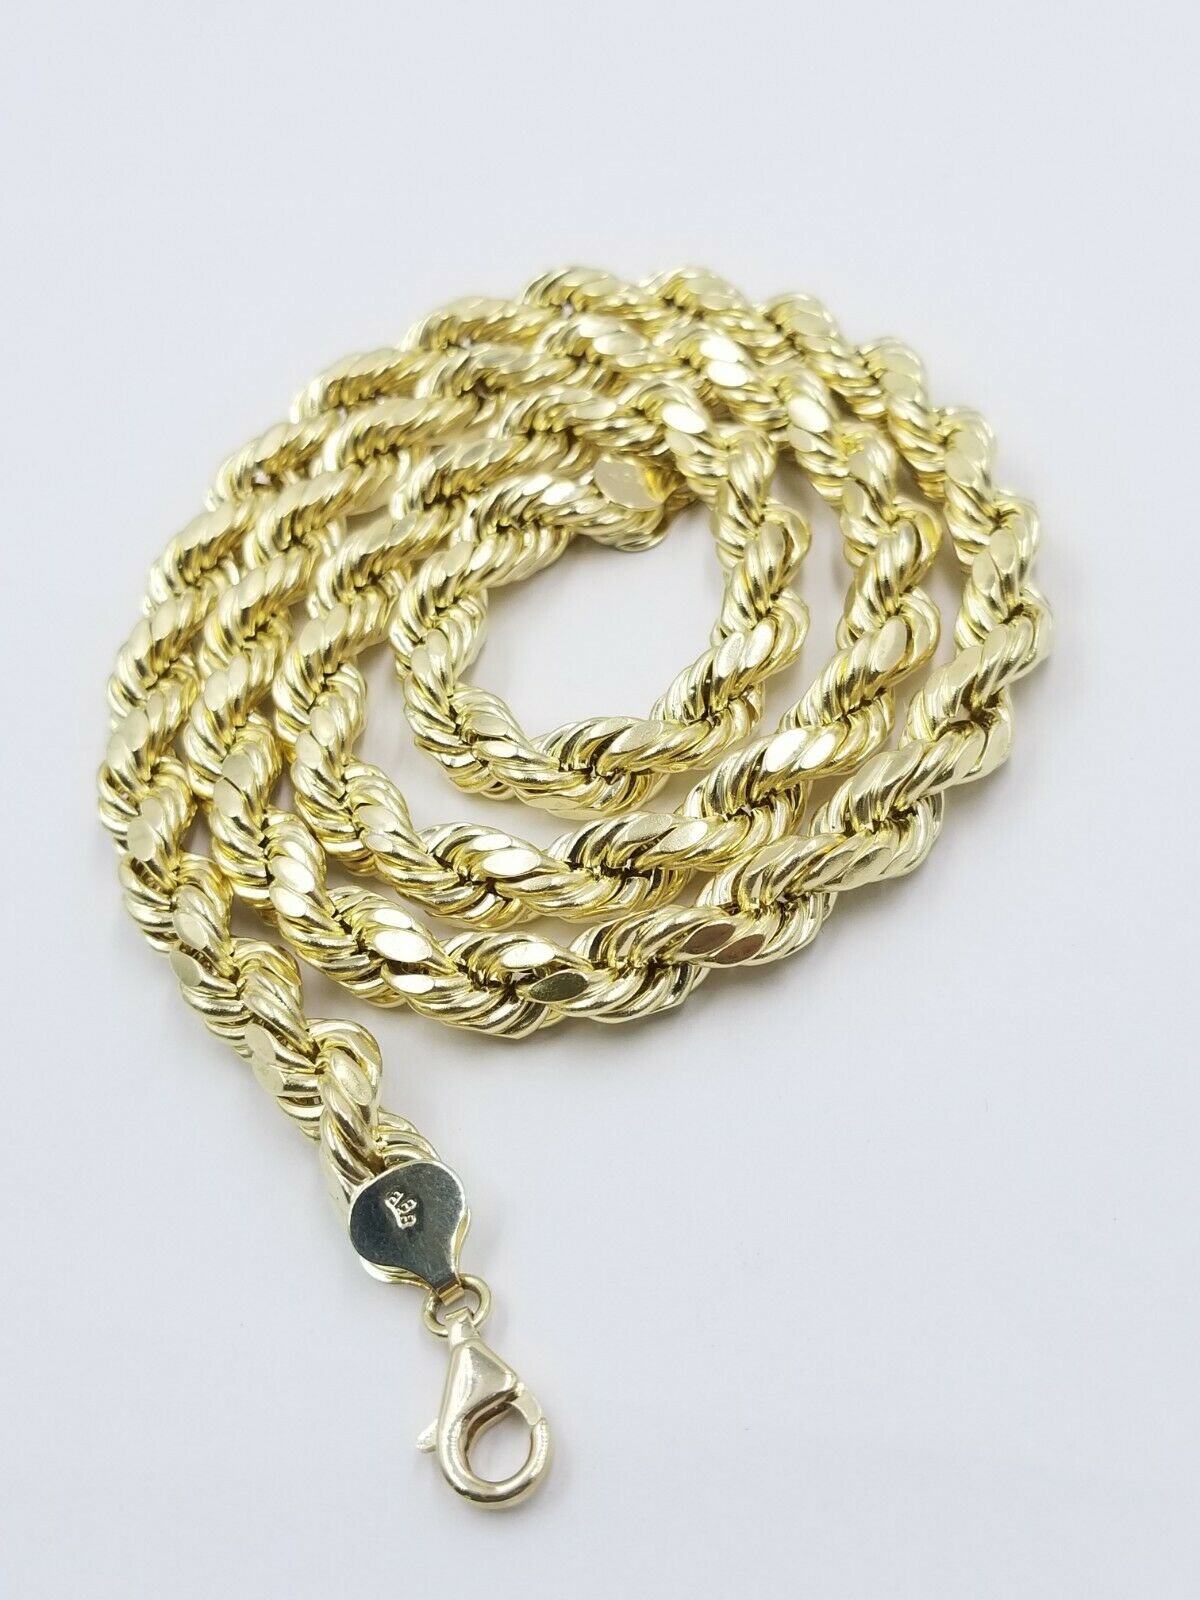 10k Gold Rolex Chain Link Necklace for Men Women